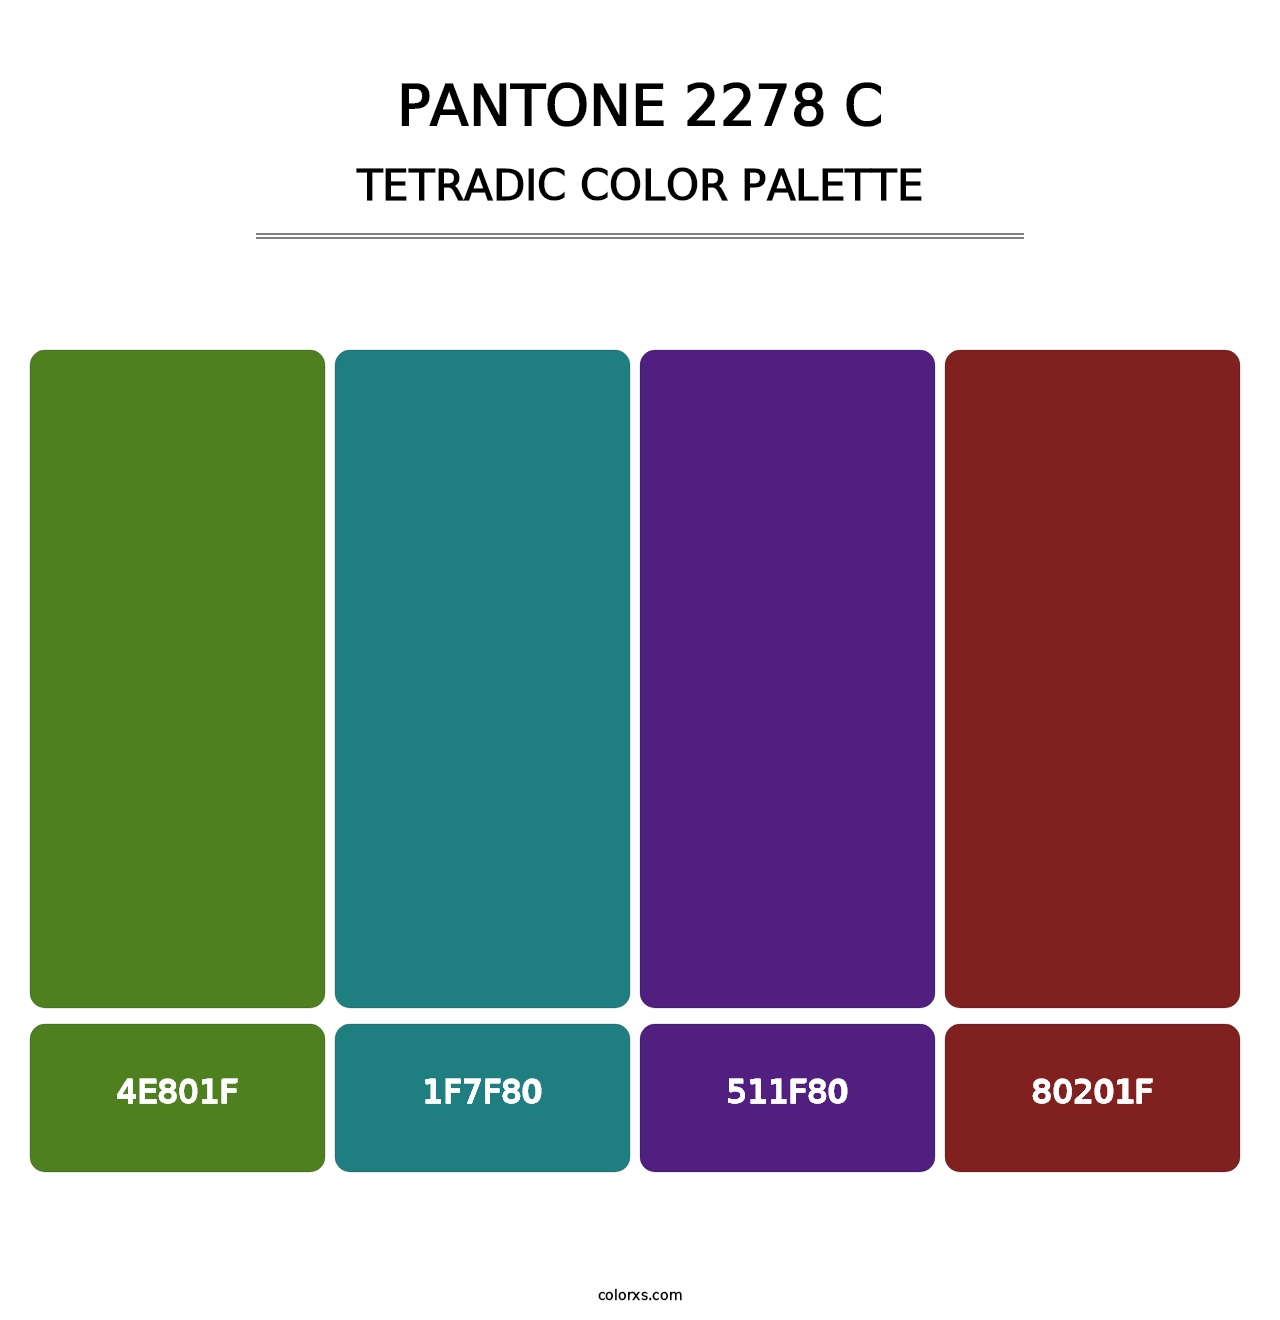 PANTONE 2278 C - Tetradic Color Palette